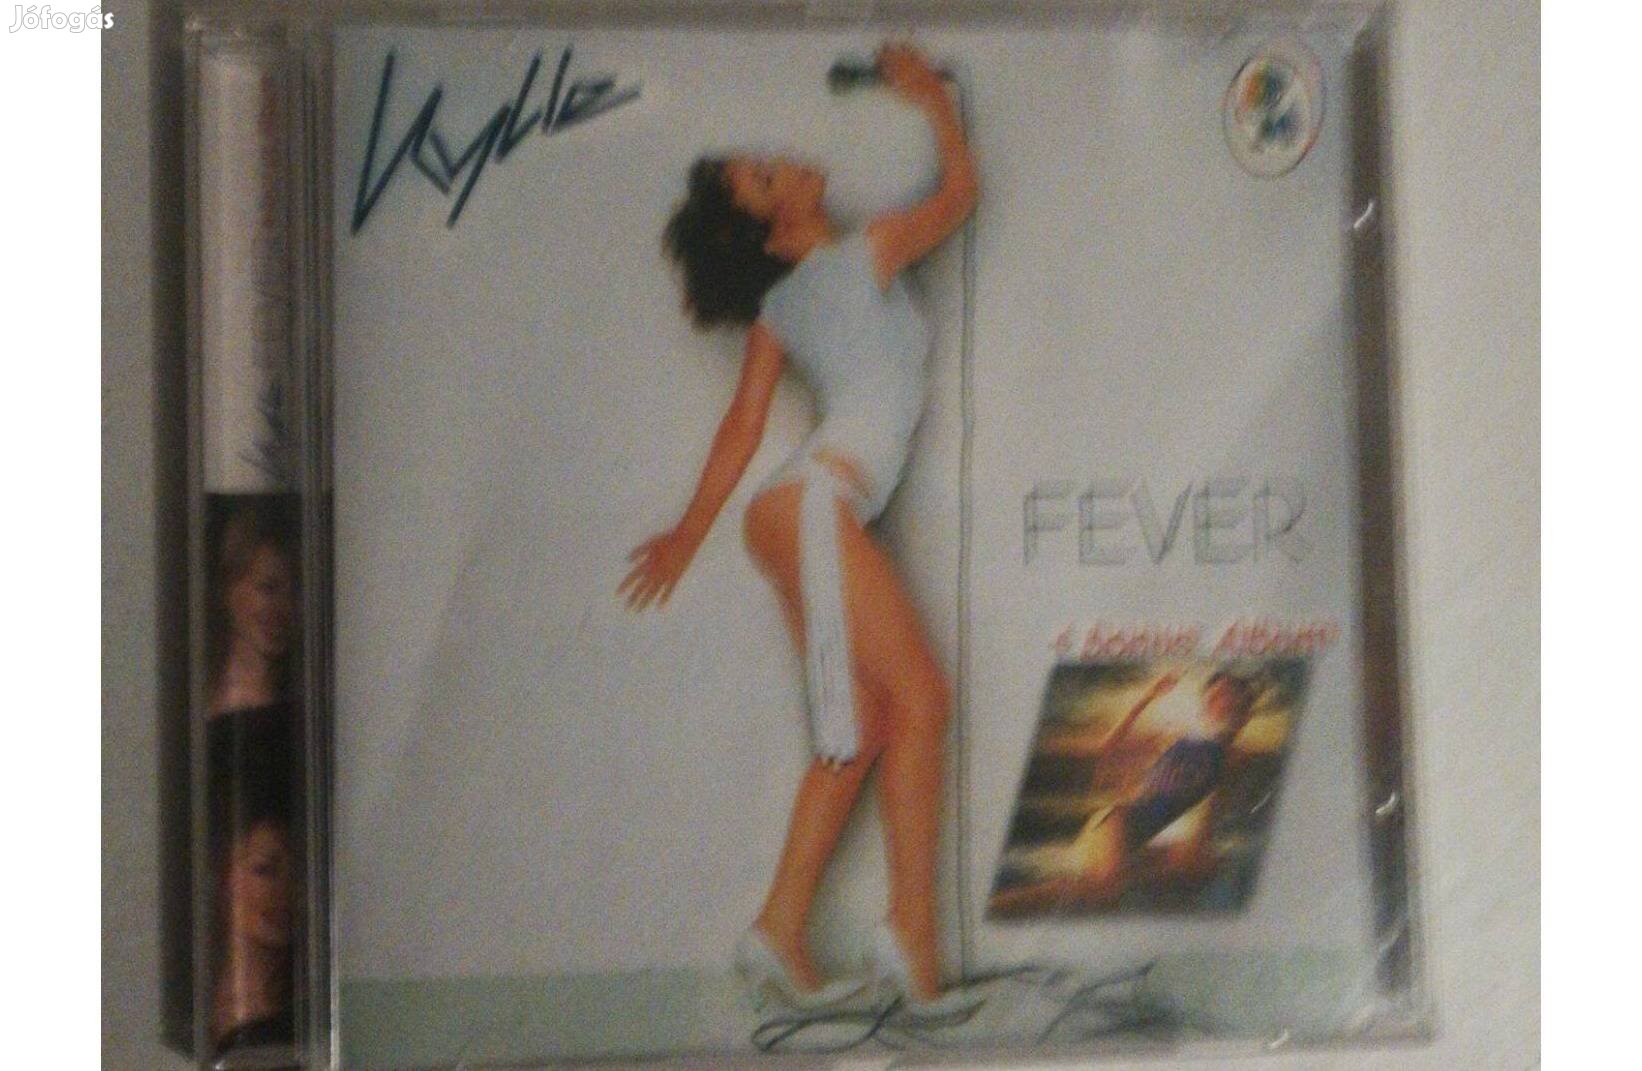 Kylie Minogue - Fever - CD lemez CD album eladö!